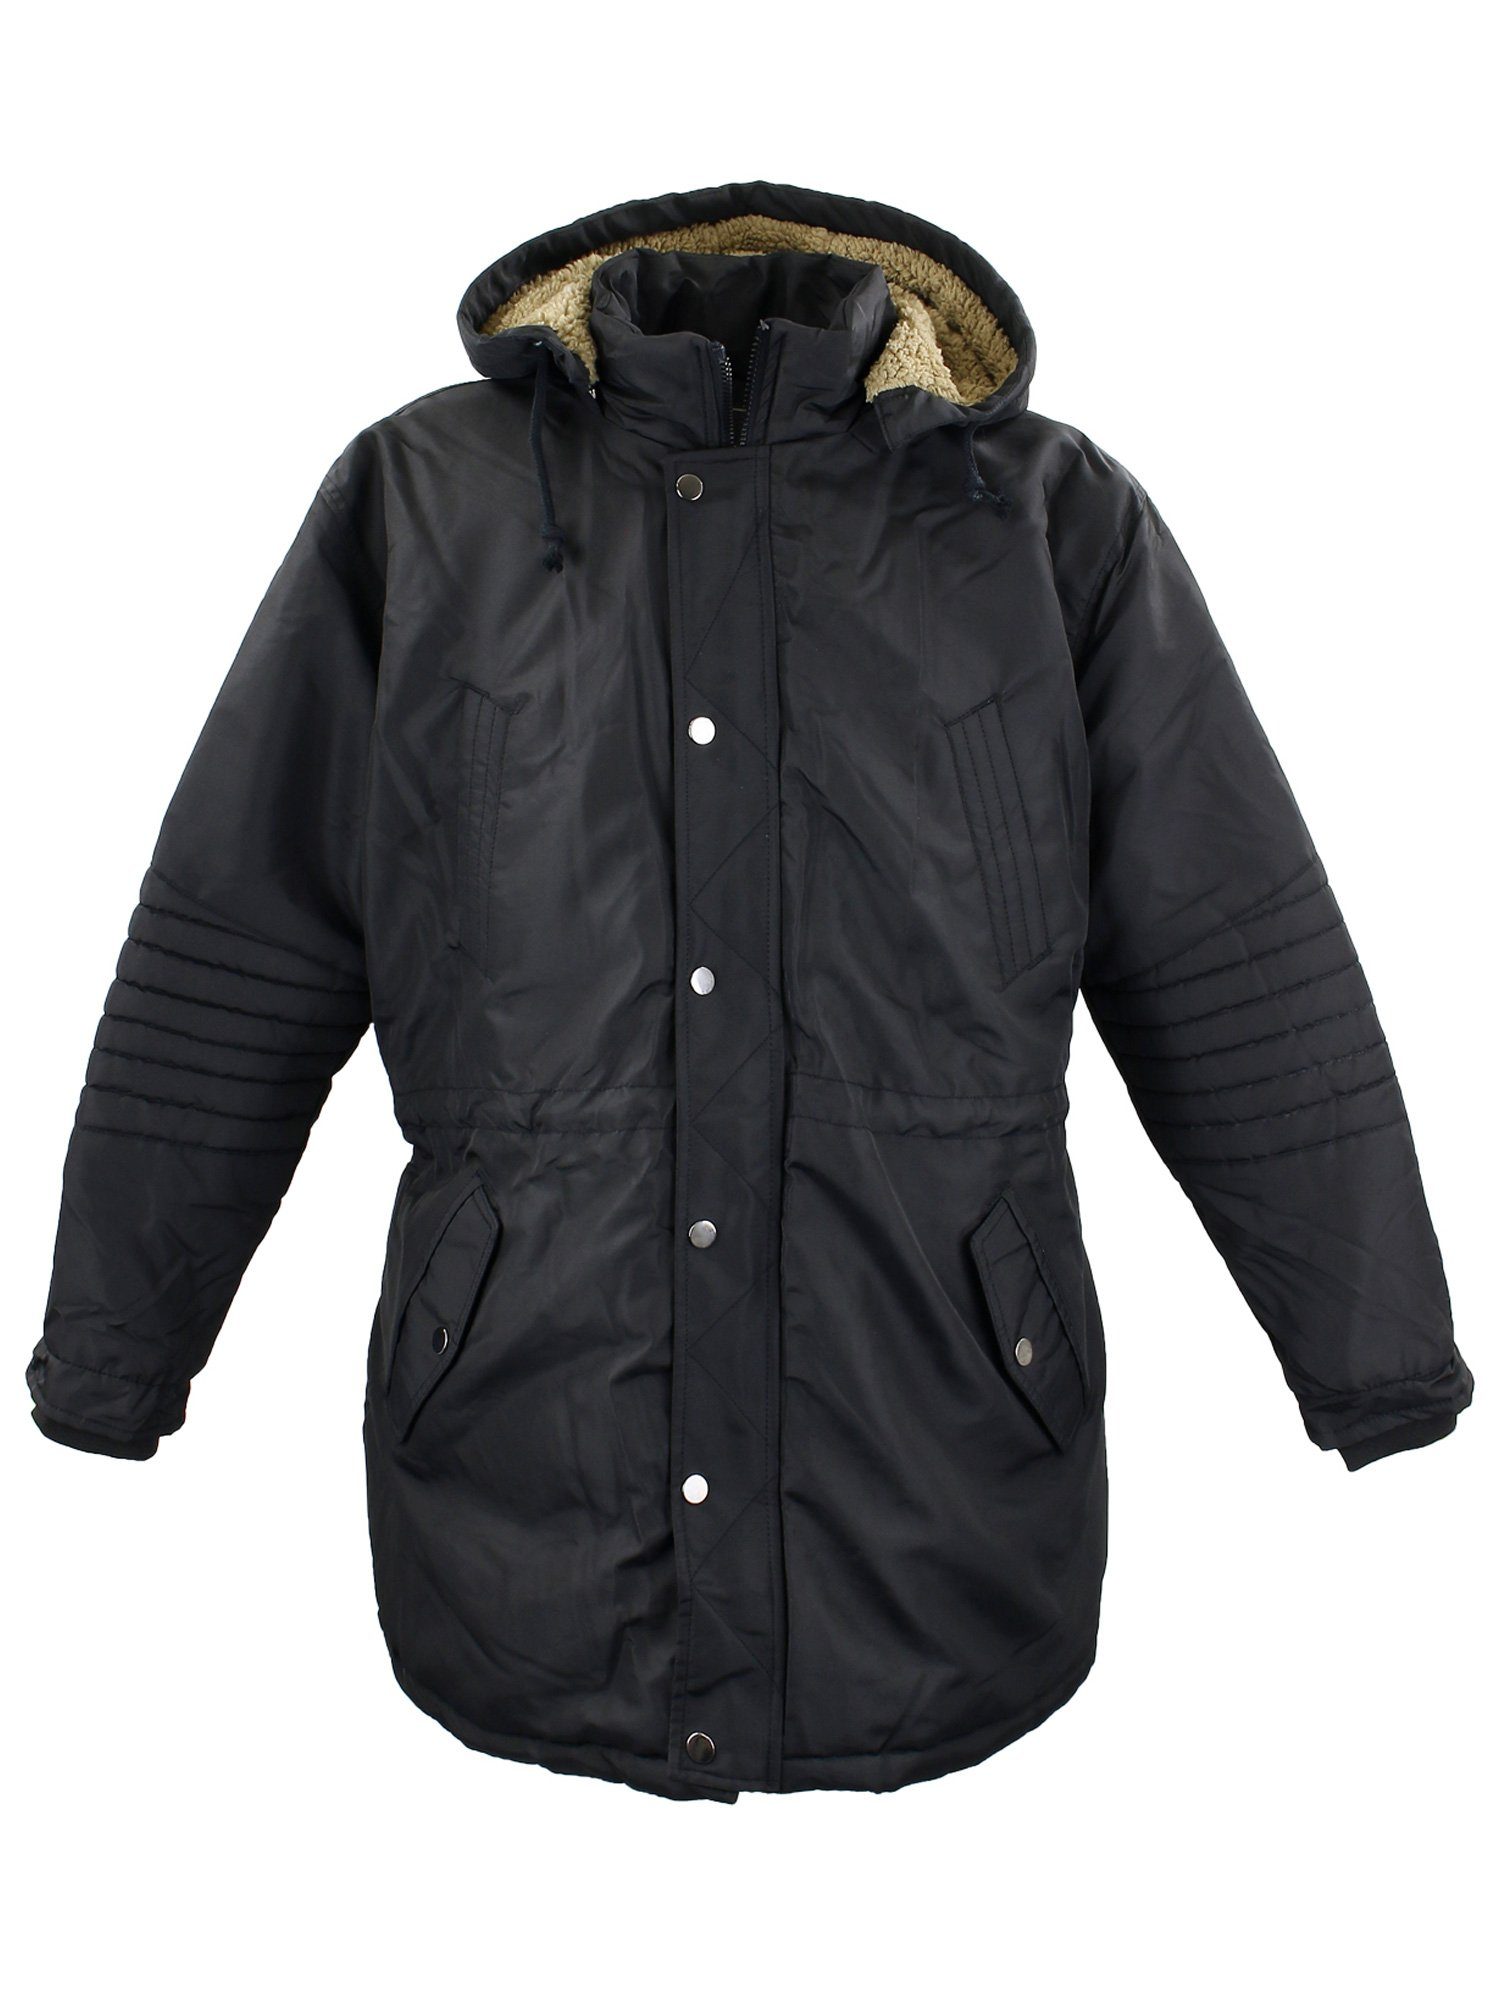 Lavecchia Winterjacke Übergrößen Jacke LV-700 mit gefütterterter & abnehmbarer Kapuze schwarz